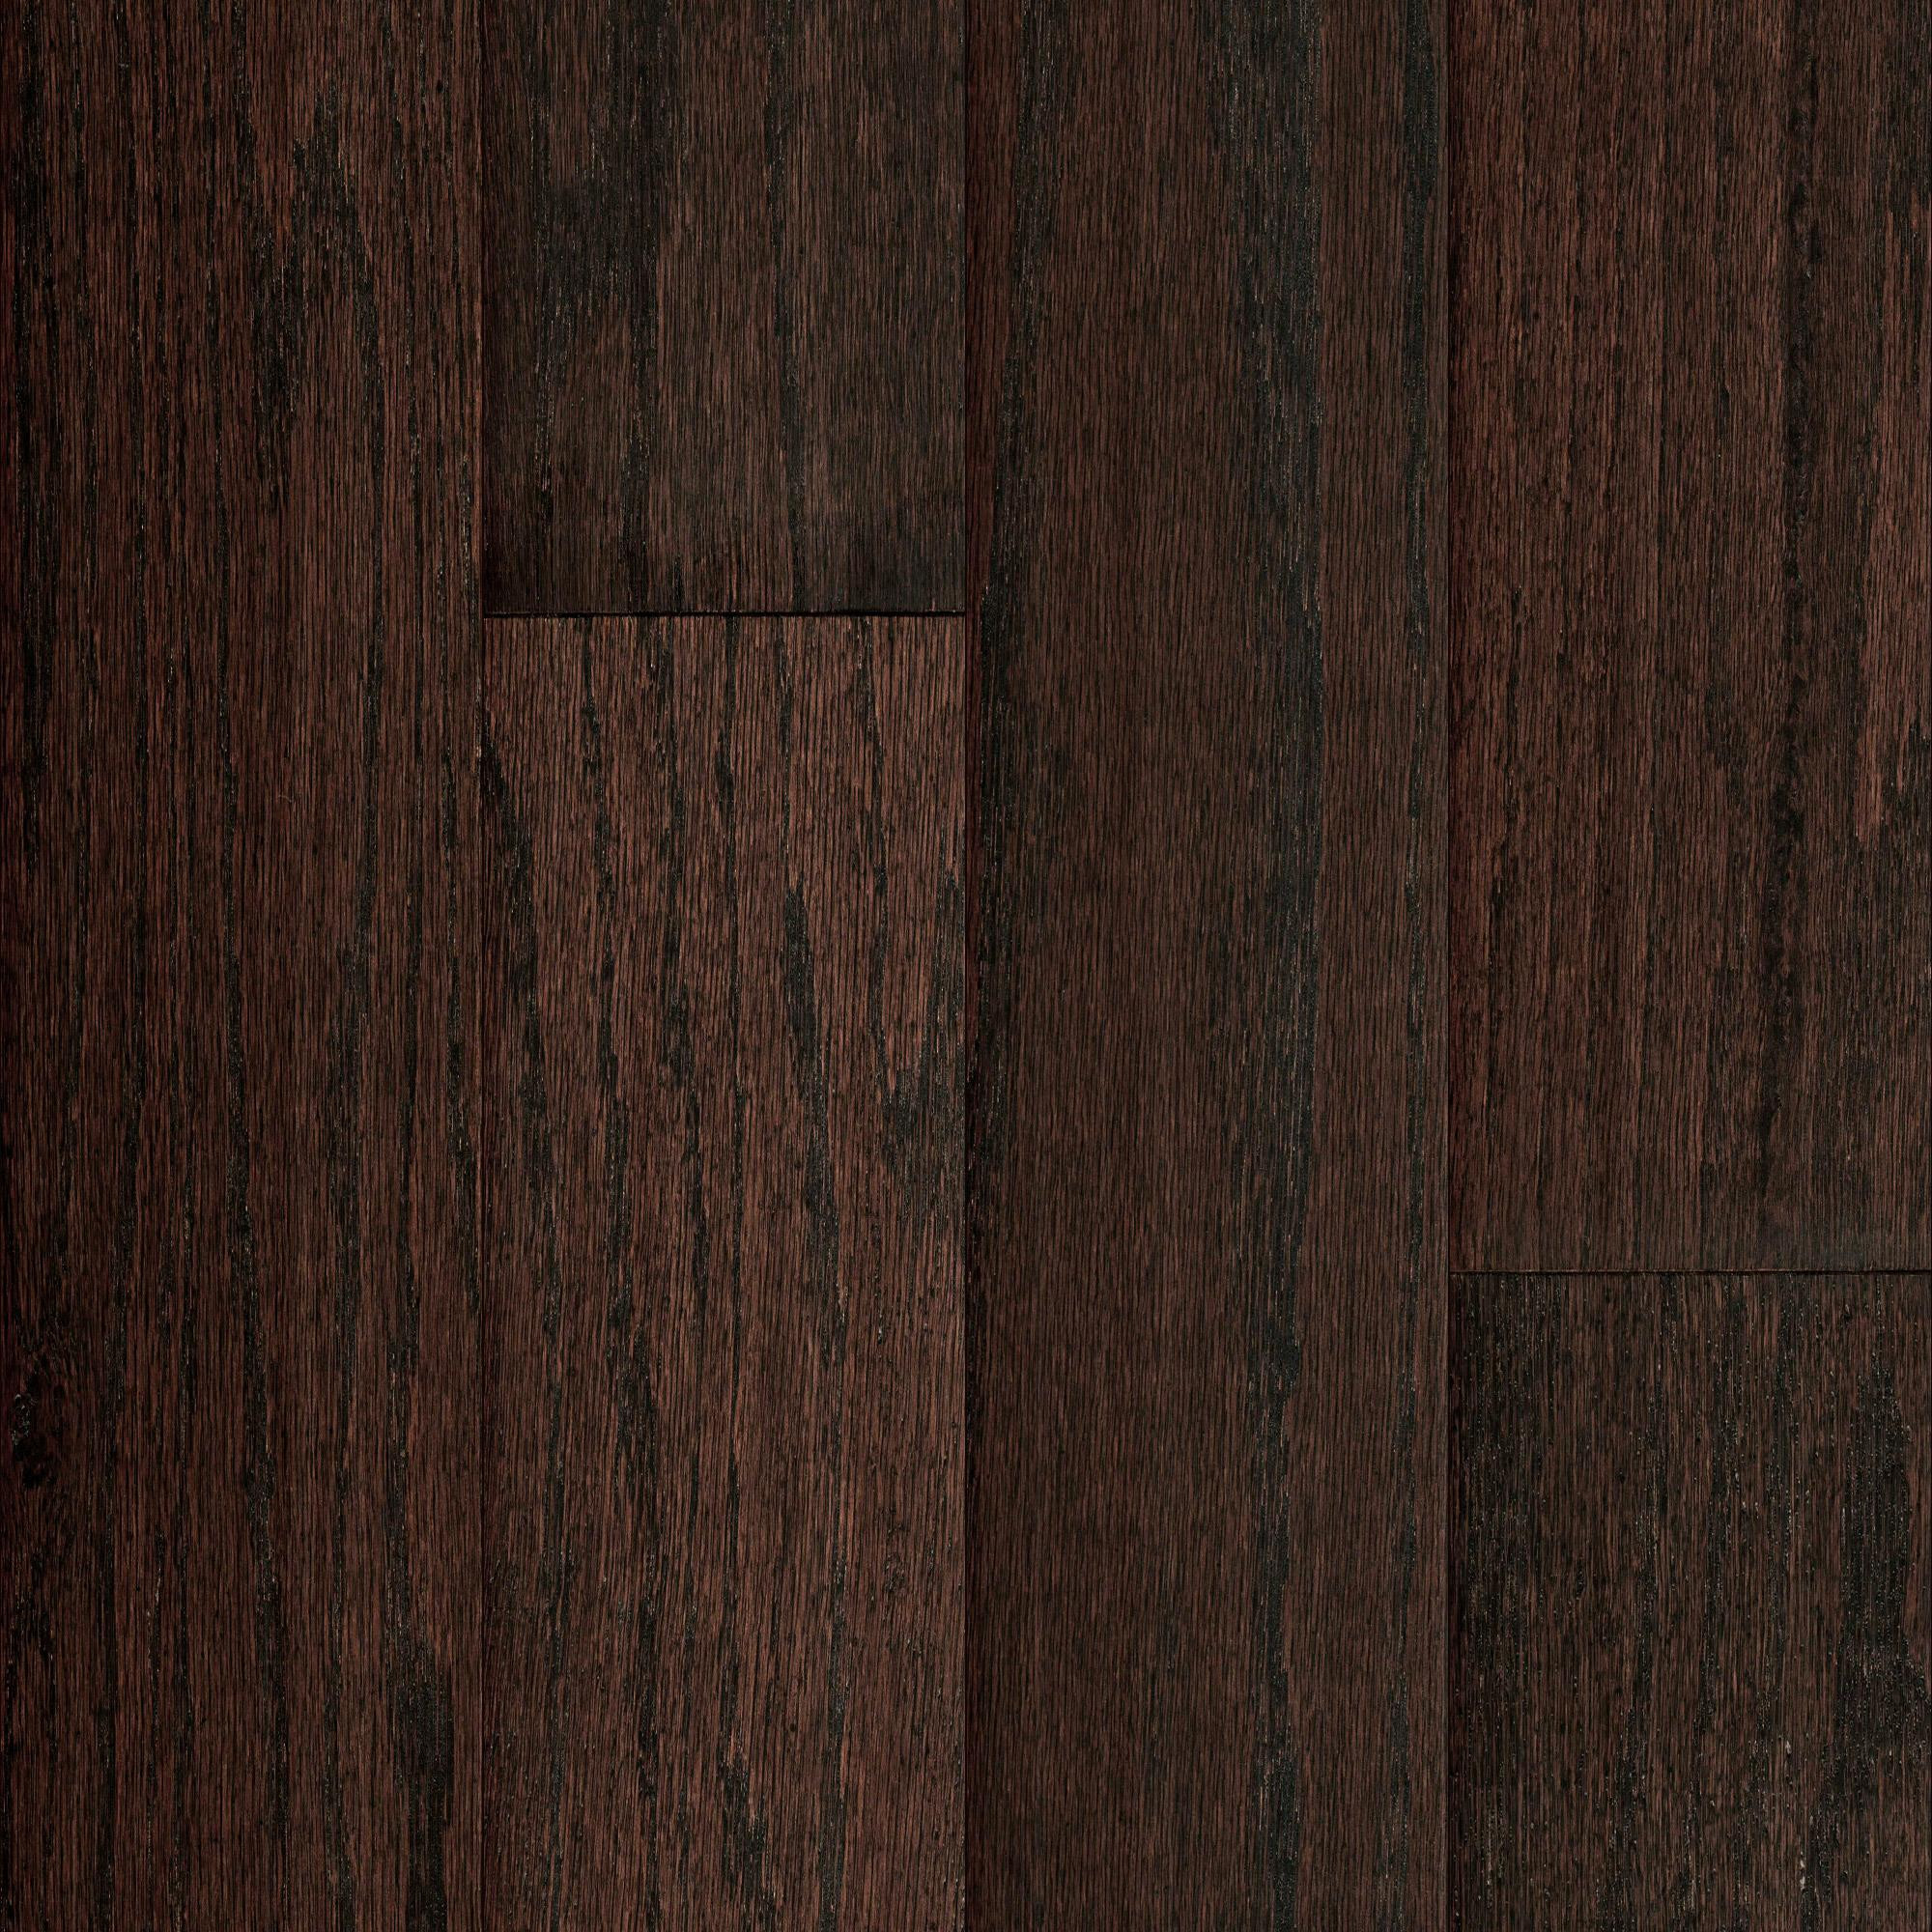 12 Trendy 8 Wide Plank Hardwood Flooring 2024 free download 8 wide plank hardwood flooring of mullican newtown plank oak bridle 1 2 thick 5 wide engineered within mullican newtown plank oak bridle 1 2 thick 5 wide engineered hardwood flooring